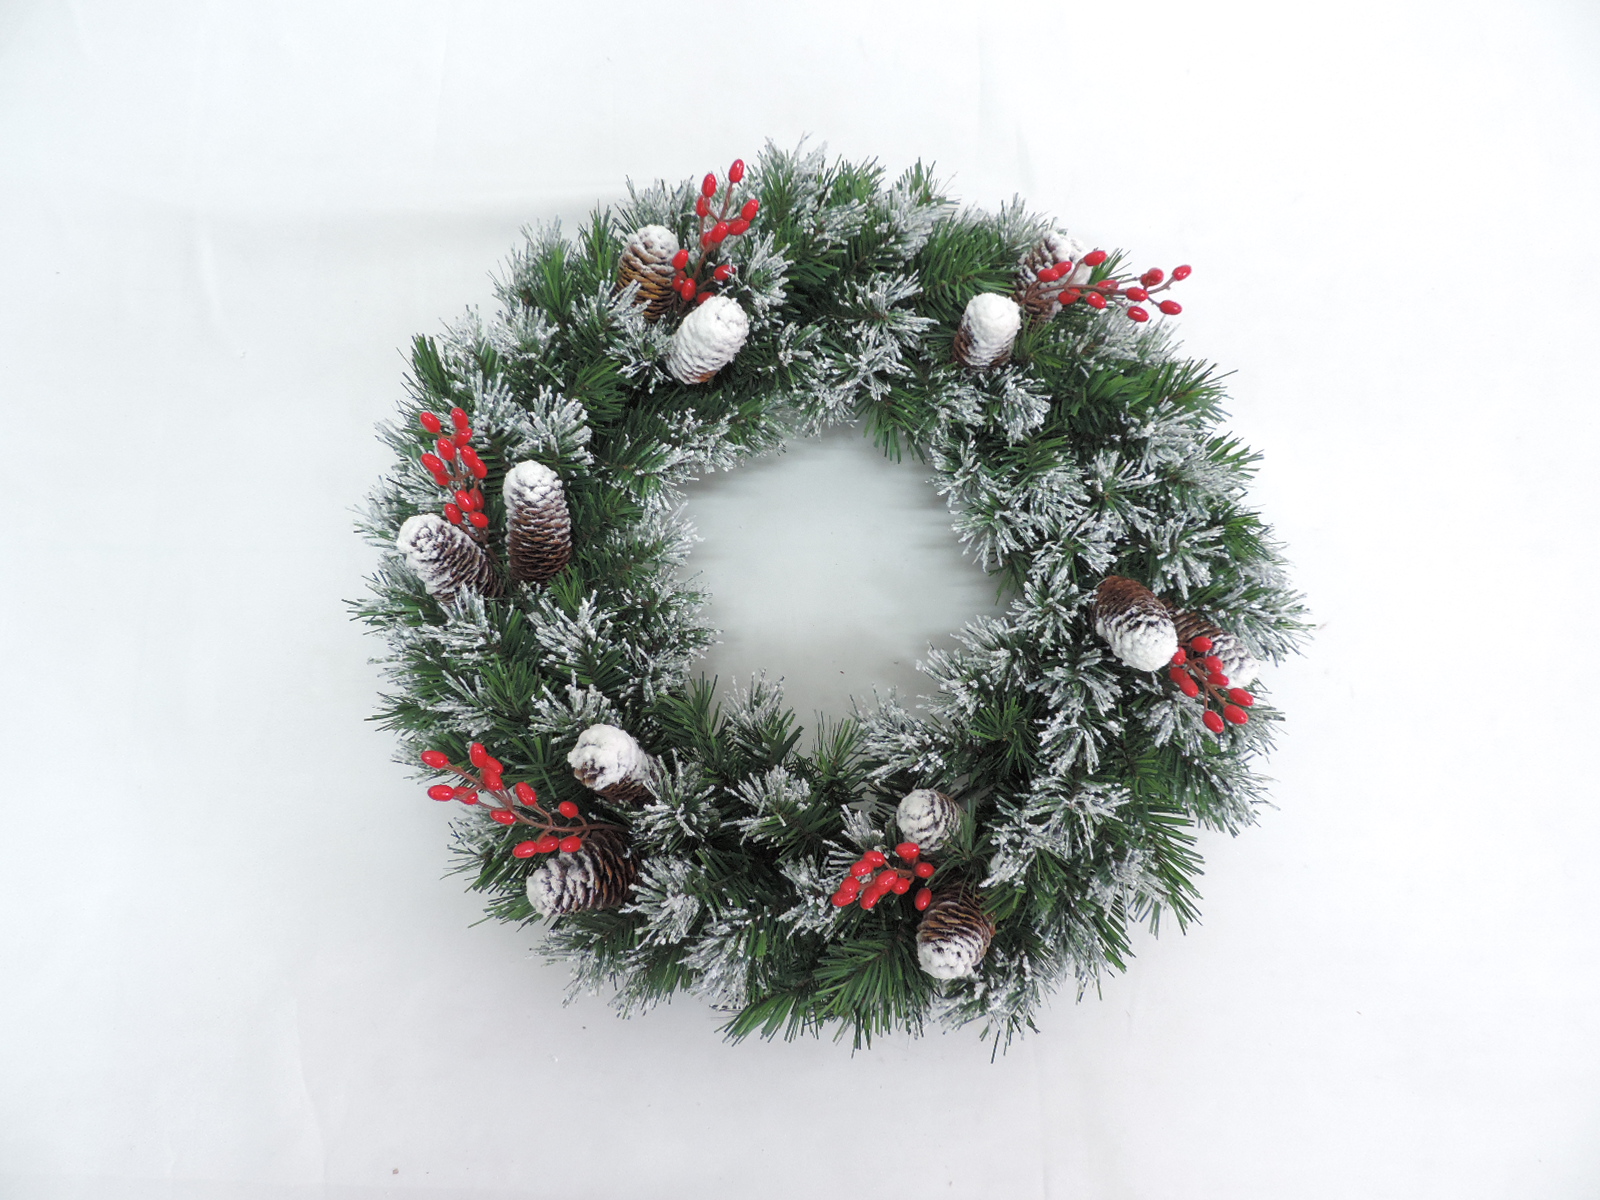 The origin and creativity of Christmas wreath